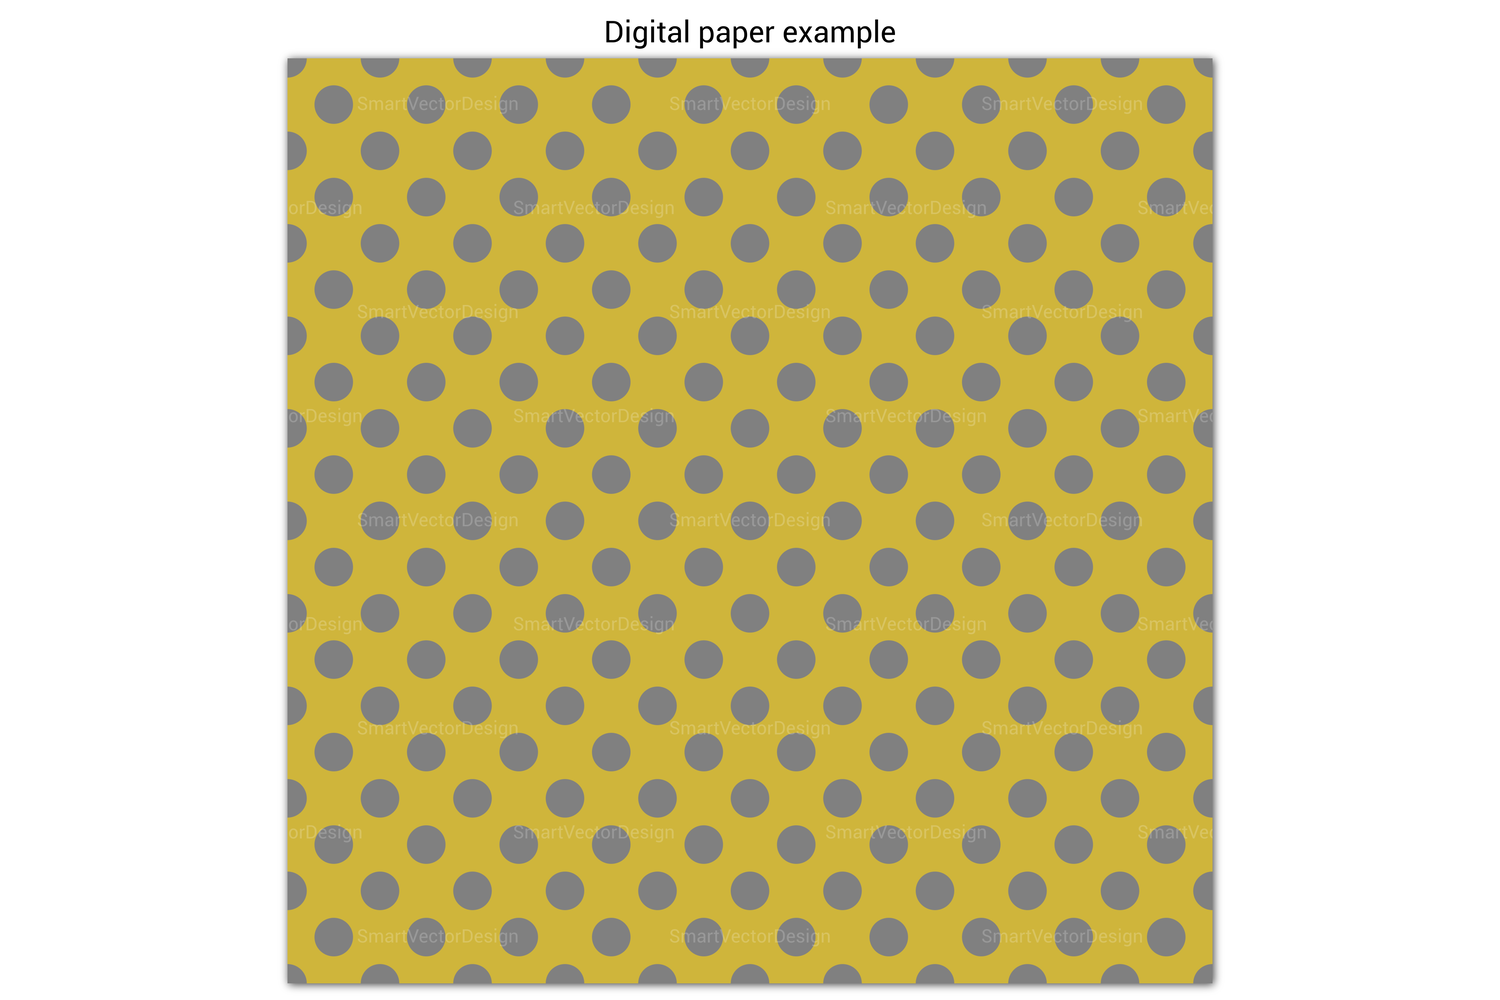 Seamless Very Large Polka Dot Pattern Paper-250 Colors on BG By  SmartVectorDesign